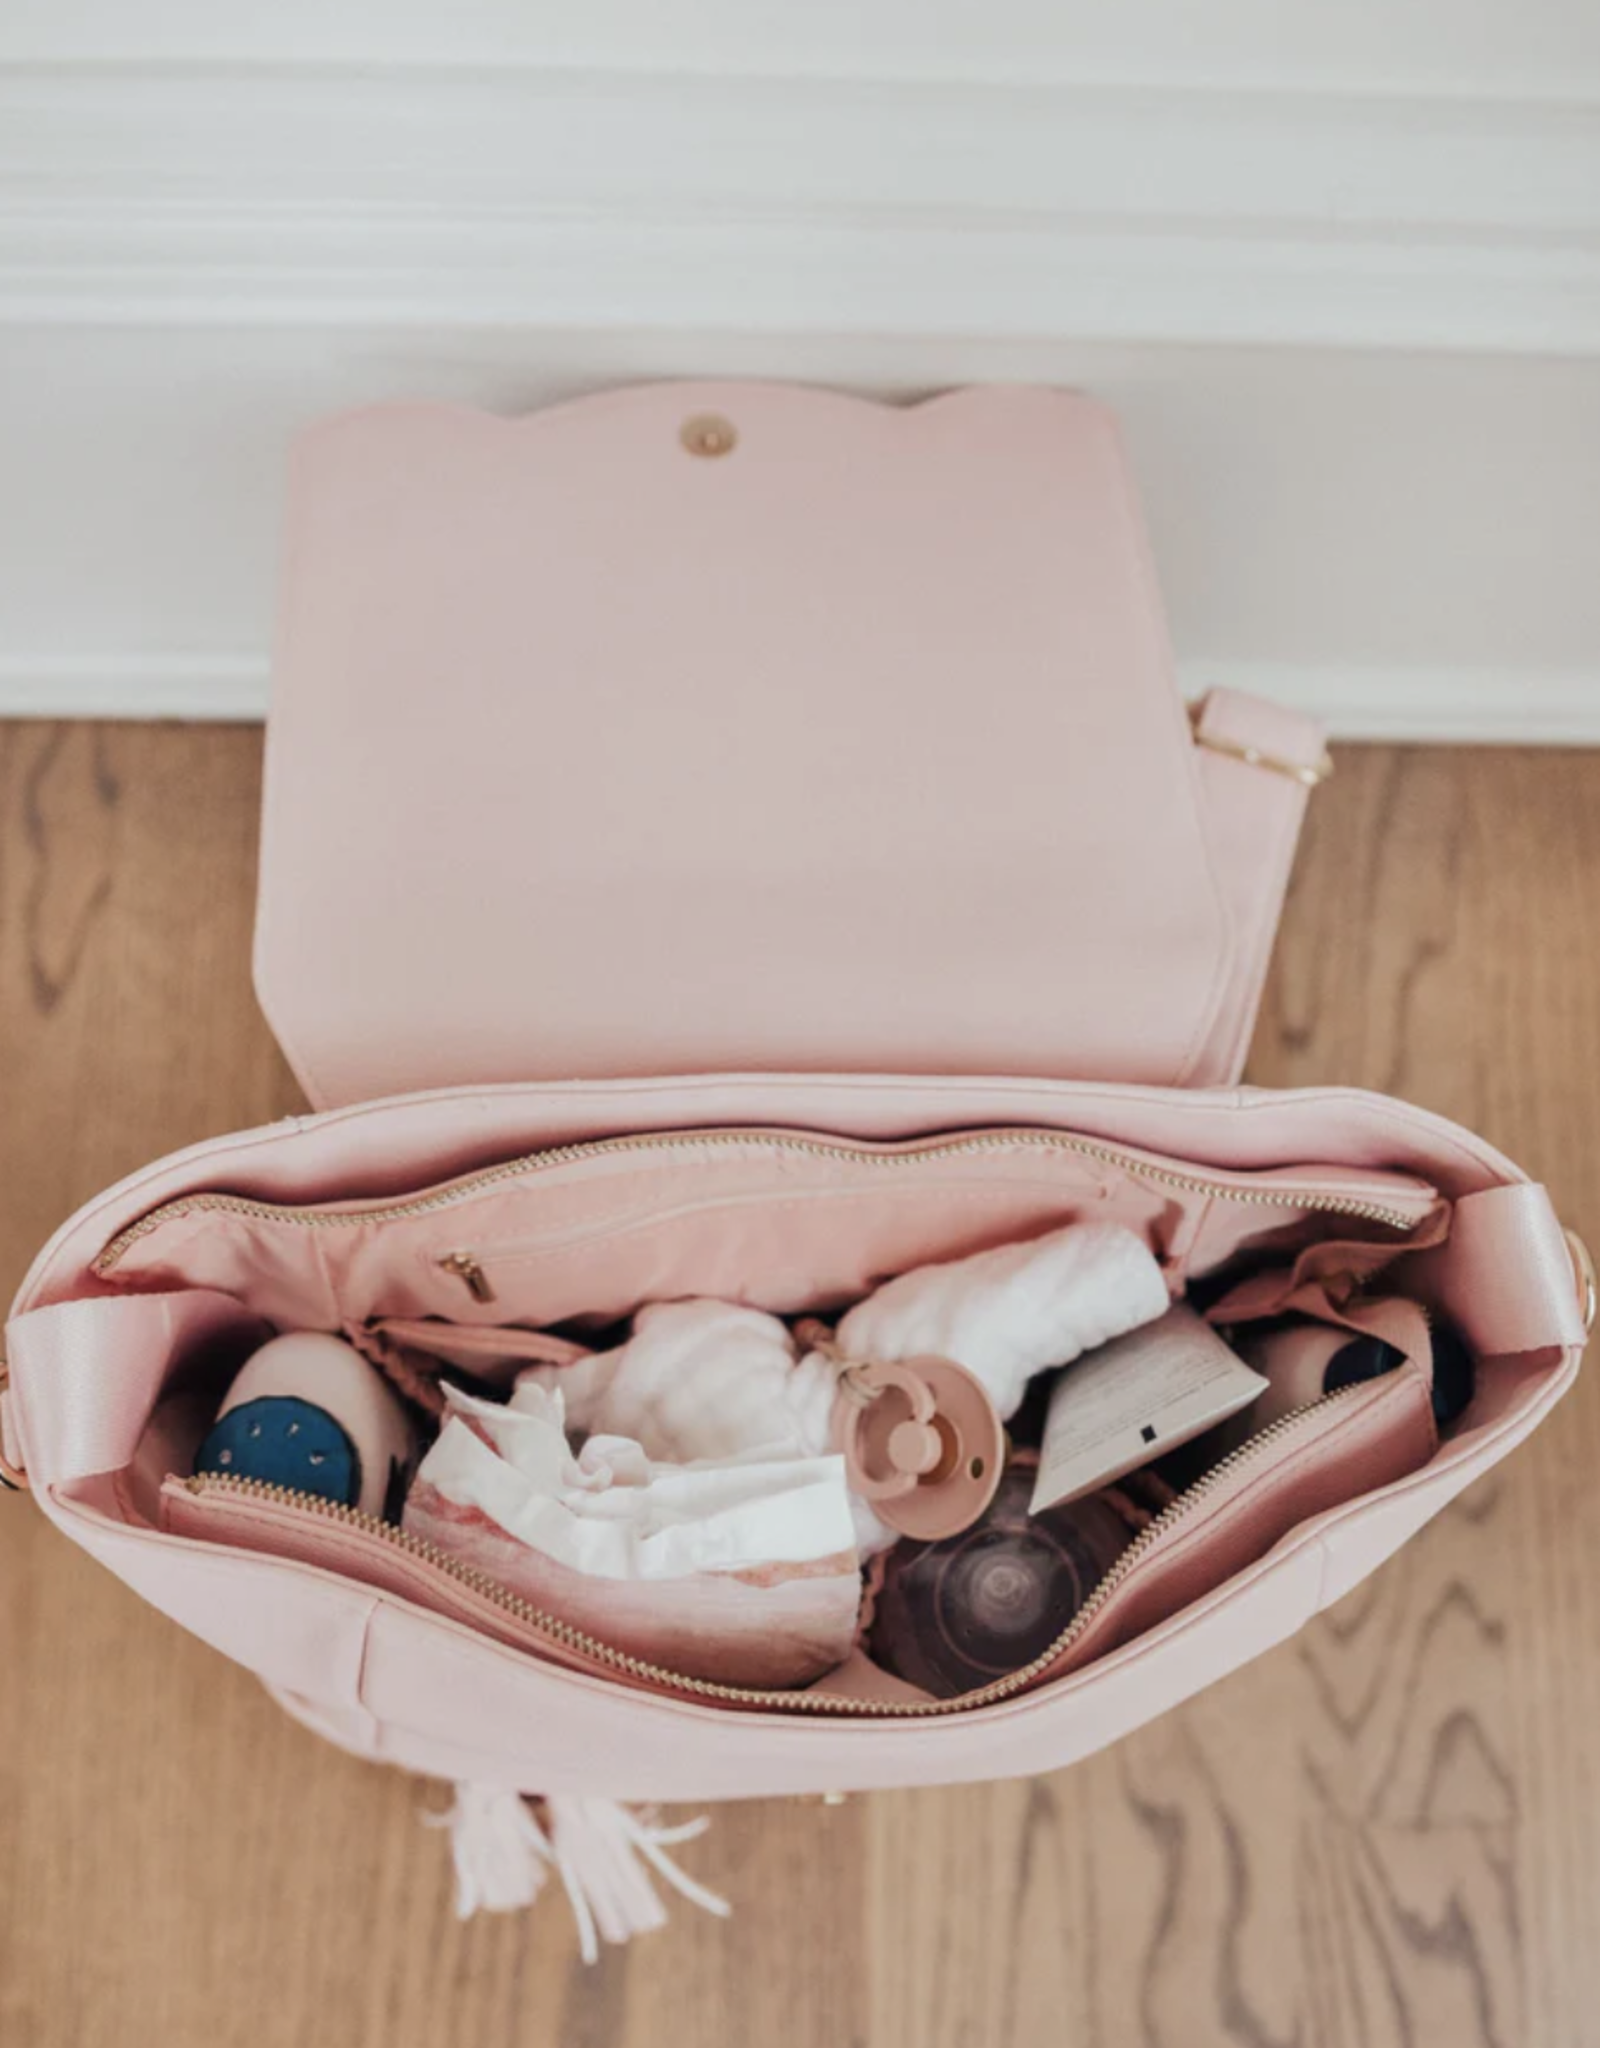 Hollis Diaper Bag – Pink & Blue Avenue